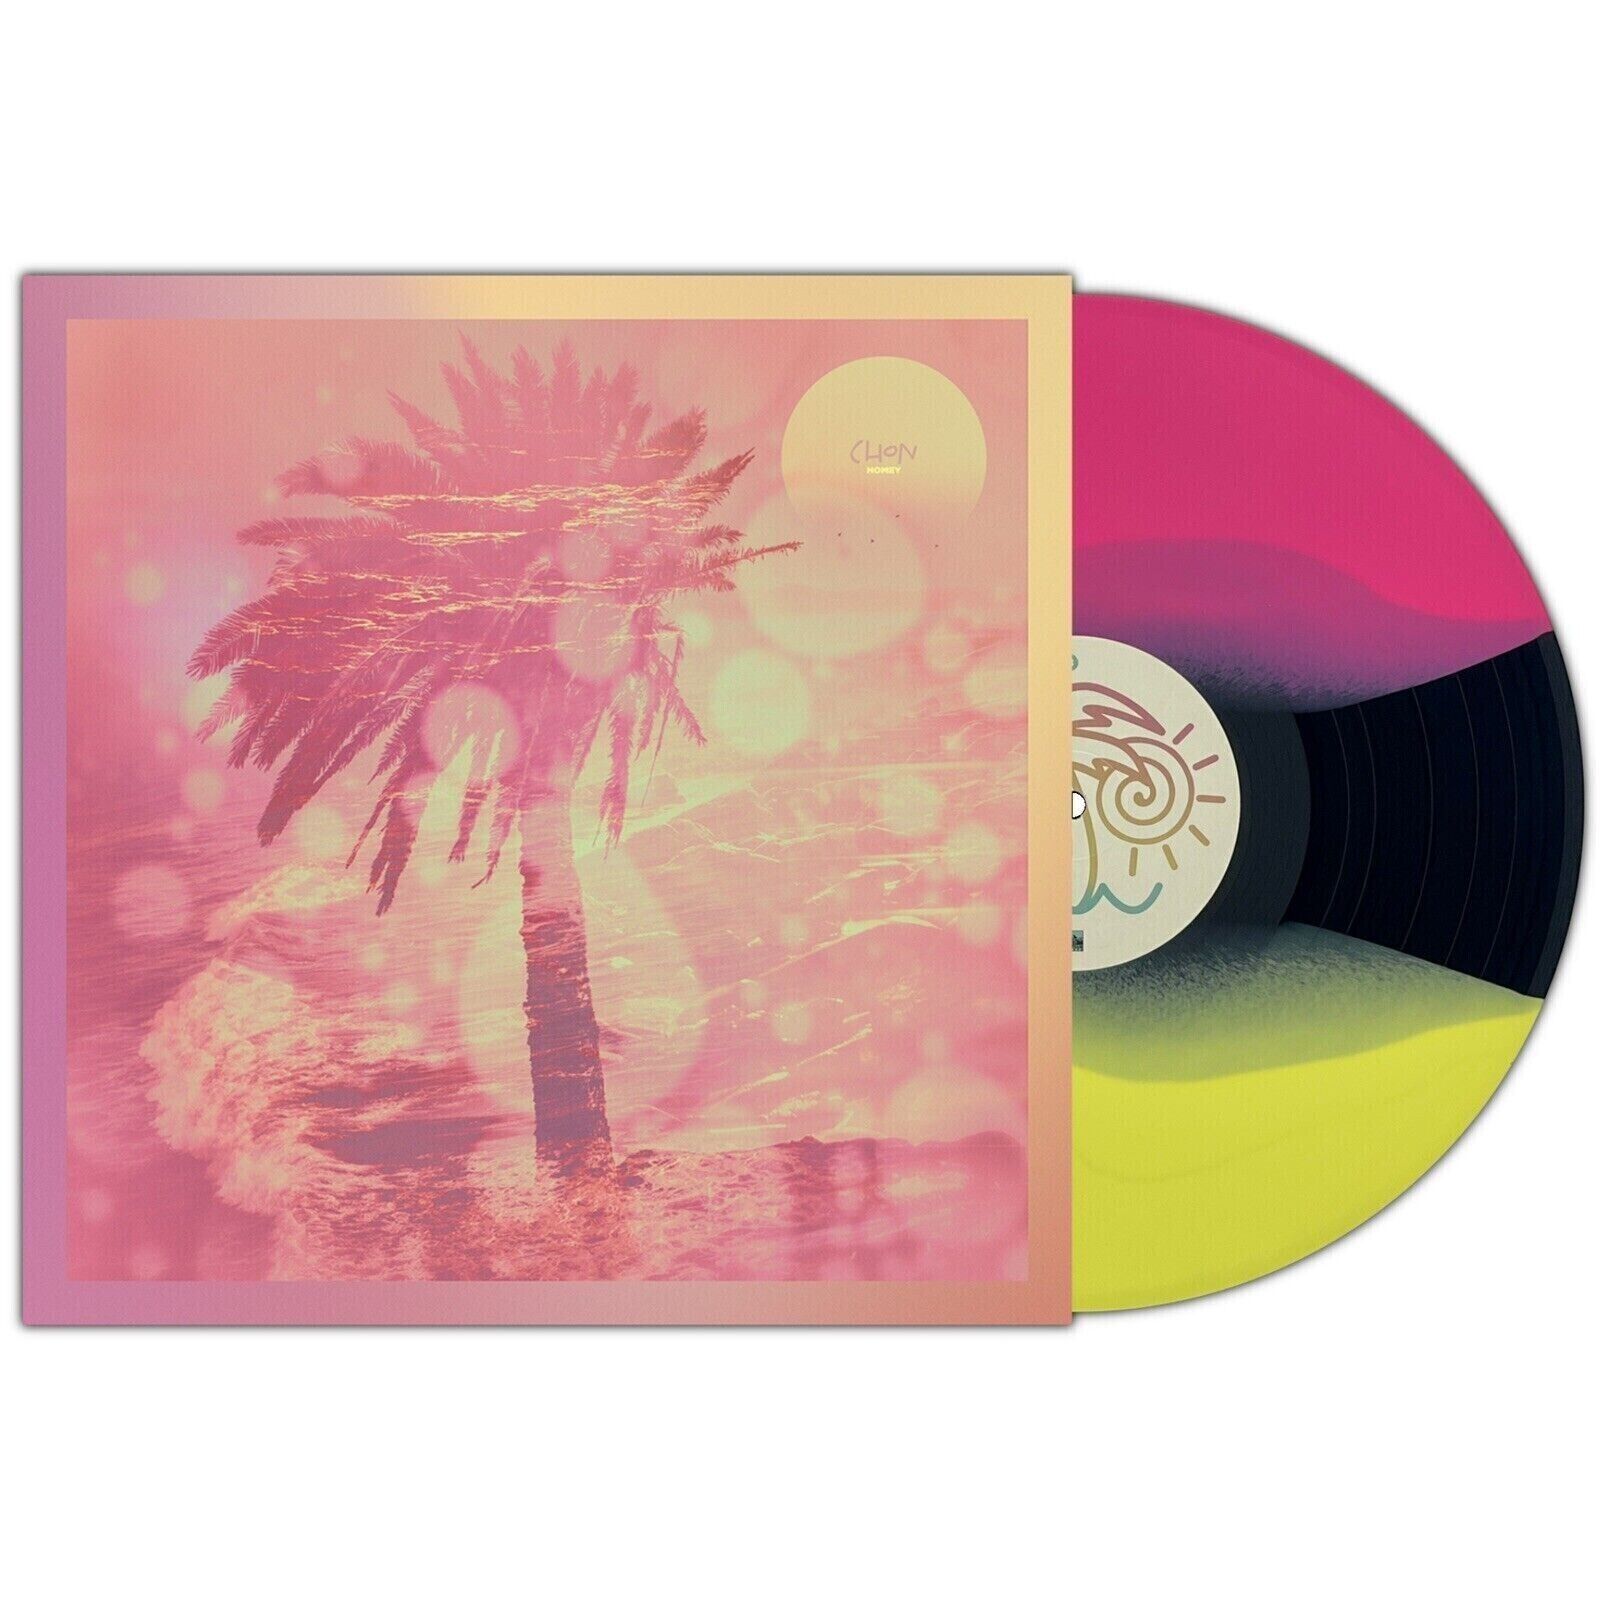 Chon – Homey: Limited Edition Tri-Stripe Coloured Vinyl LP NEW & SEALED